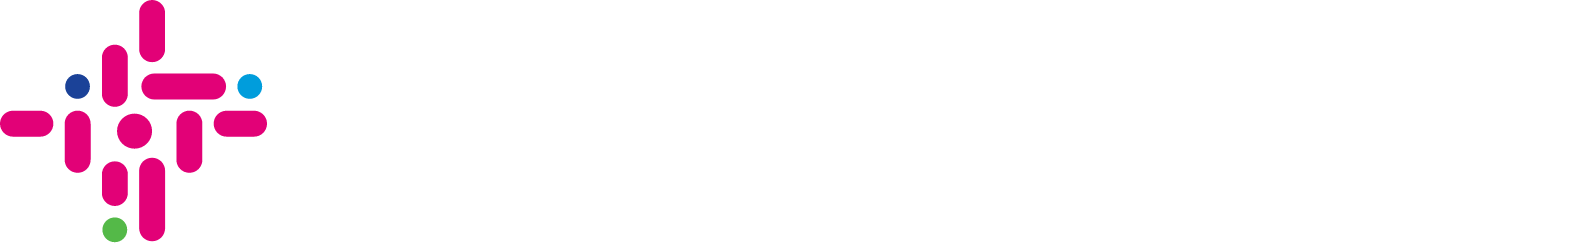 Organon logo large for dark backgrounds (transparent PNG)